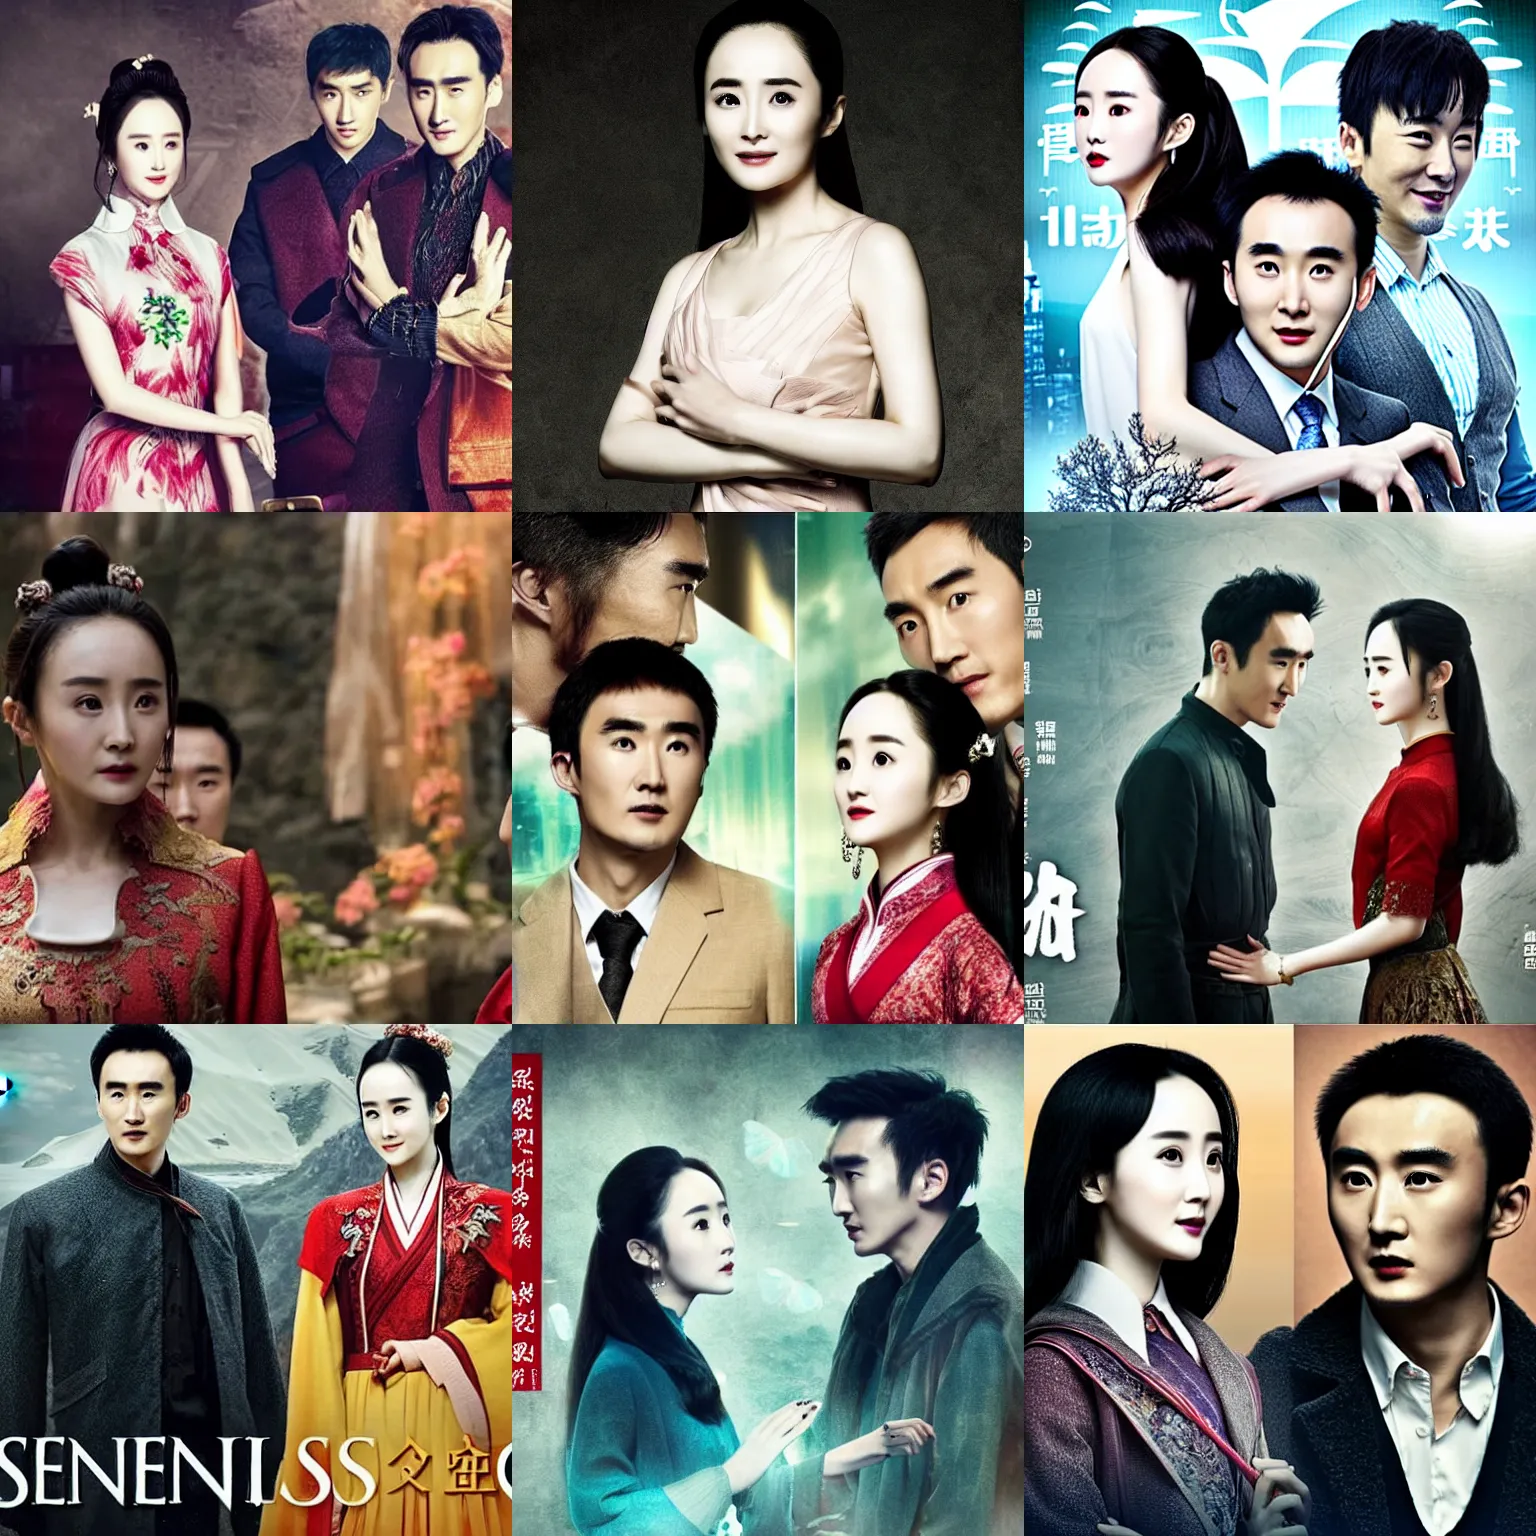 Prompt: Sense and Sensebility, in the leading roles Yang Mi, Mark Chao, Dilraba Dilmurat, Vengo Gao, series on Netflix